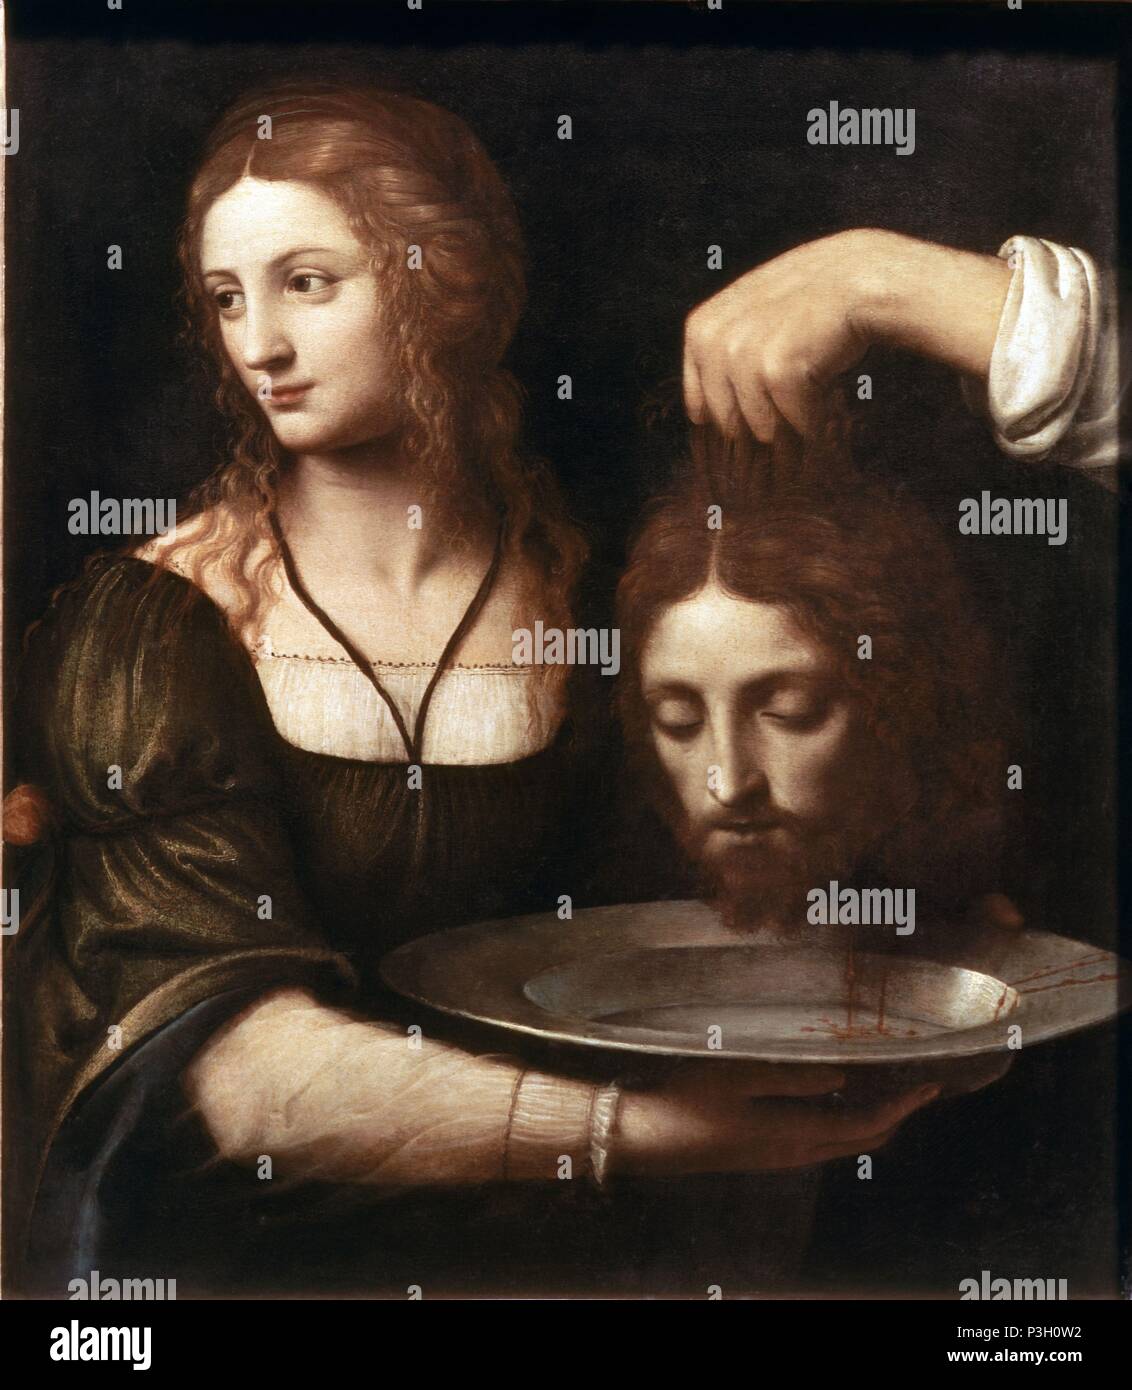 SALOME CON LA CABEZA DEL BAUTISTA. Author: Bernardino Luini (c. 1480-1532). Location: LOUVRE MUSEUM-PAINTINGS, FRANCE. Stock Photo